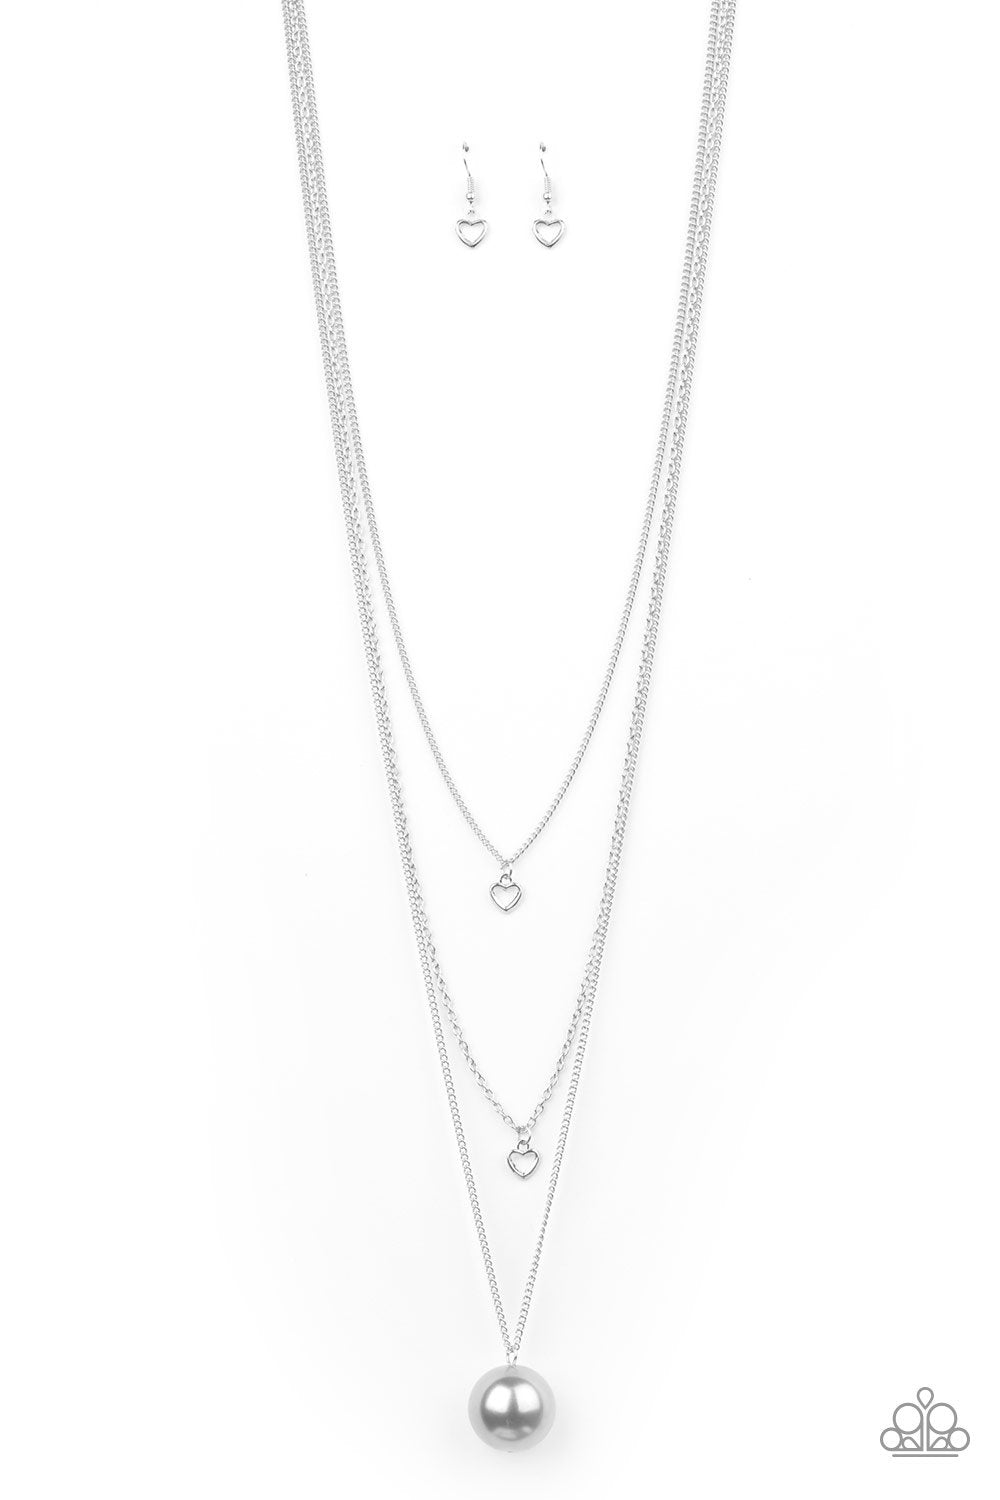 Hearty Heirloom - Silver (Heart) Necklace freeshipping - JewLz4u Gemstone Gallery